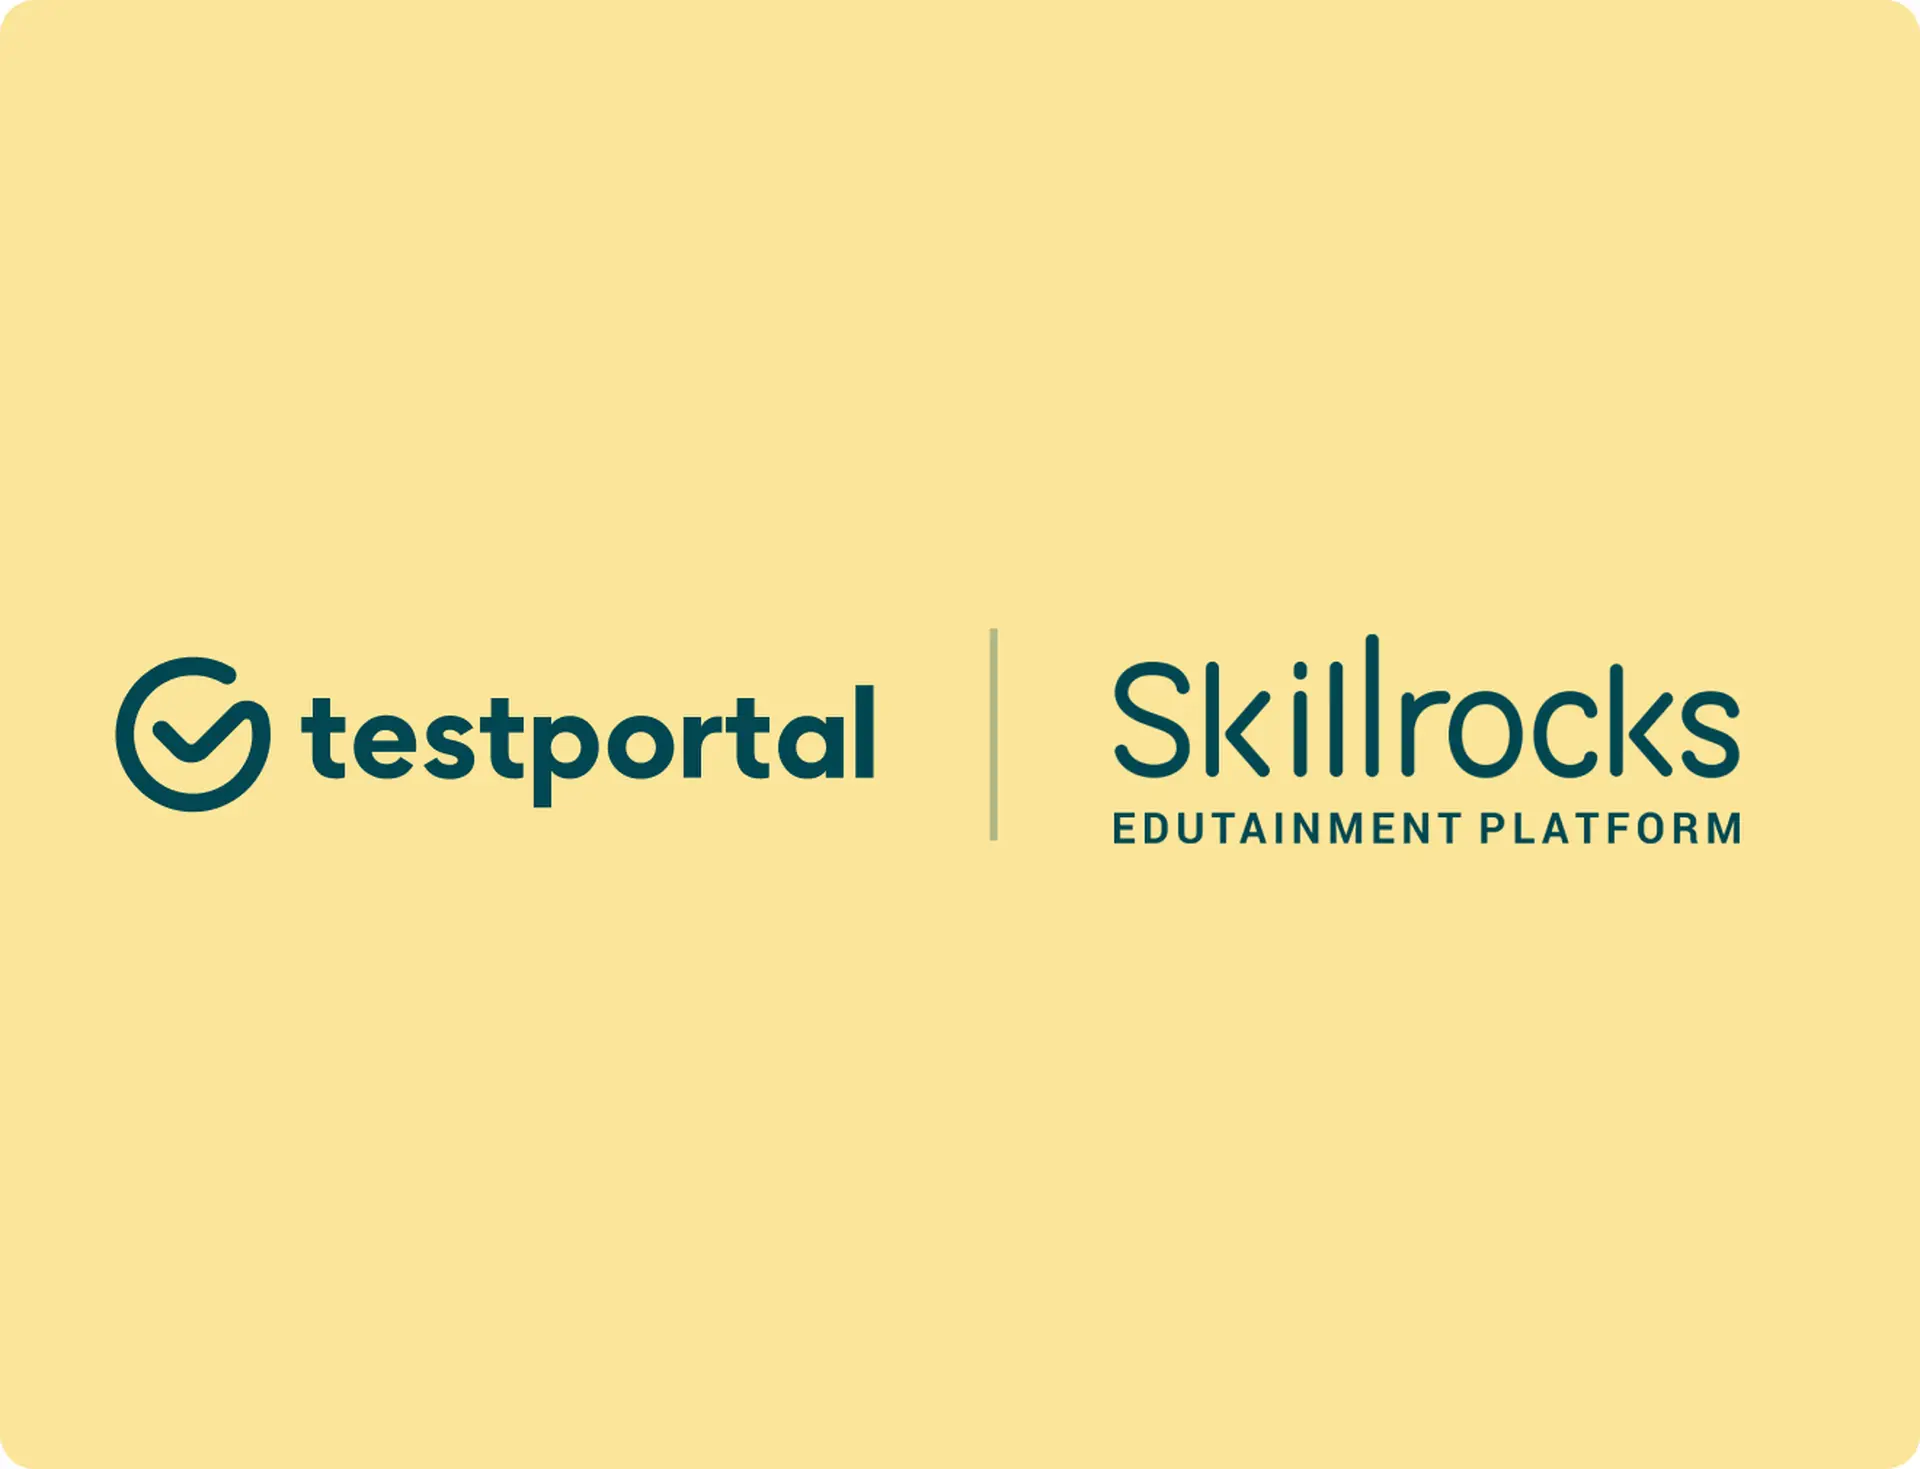 Testportal and Skillrocks success story